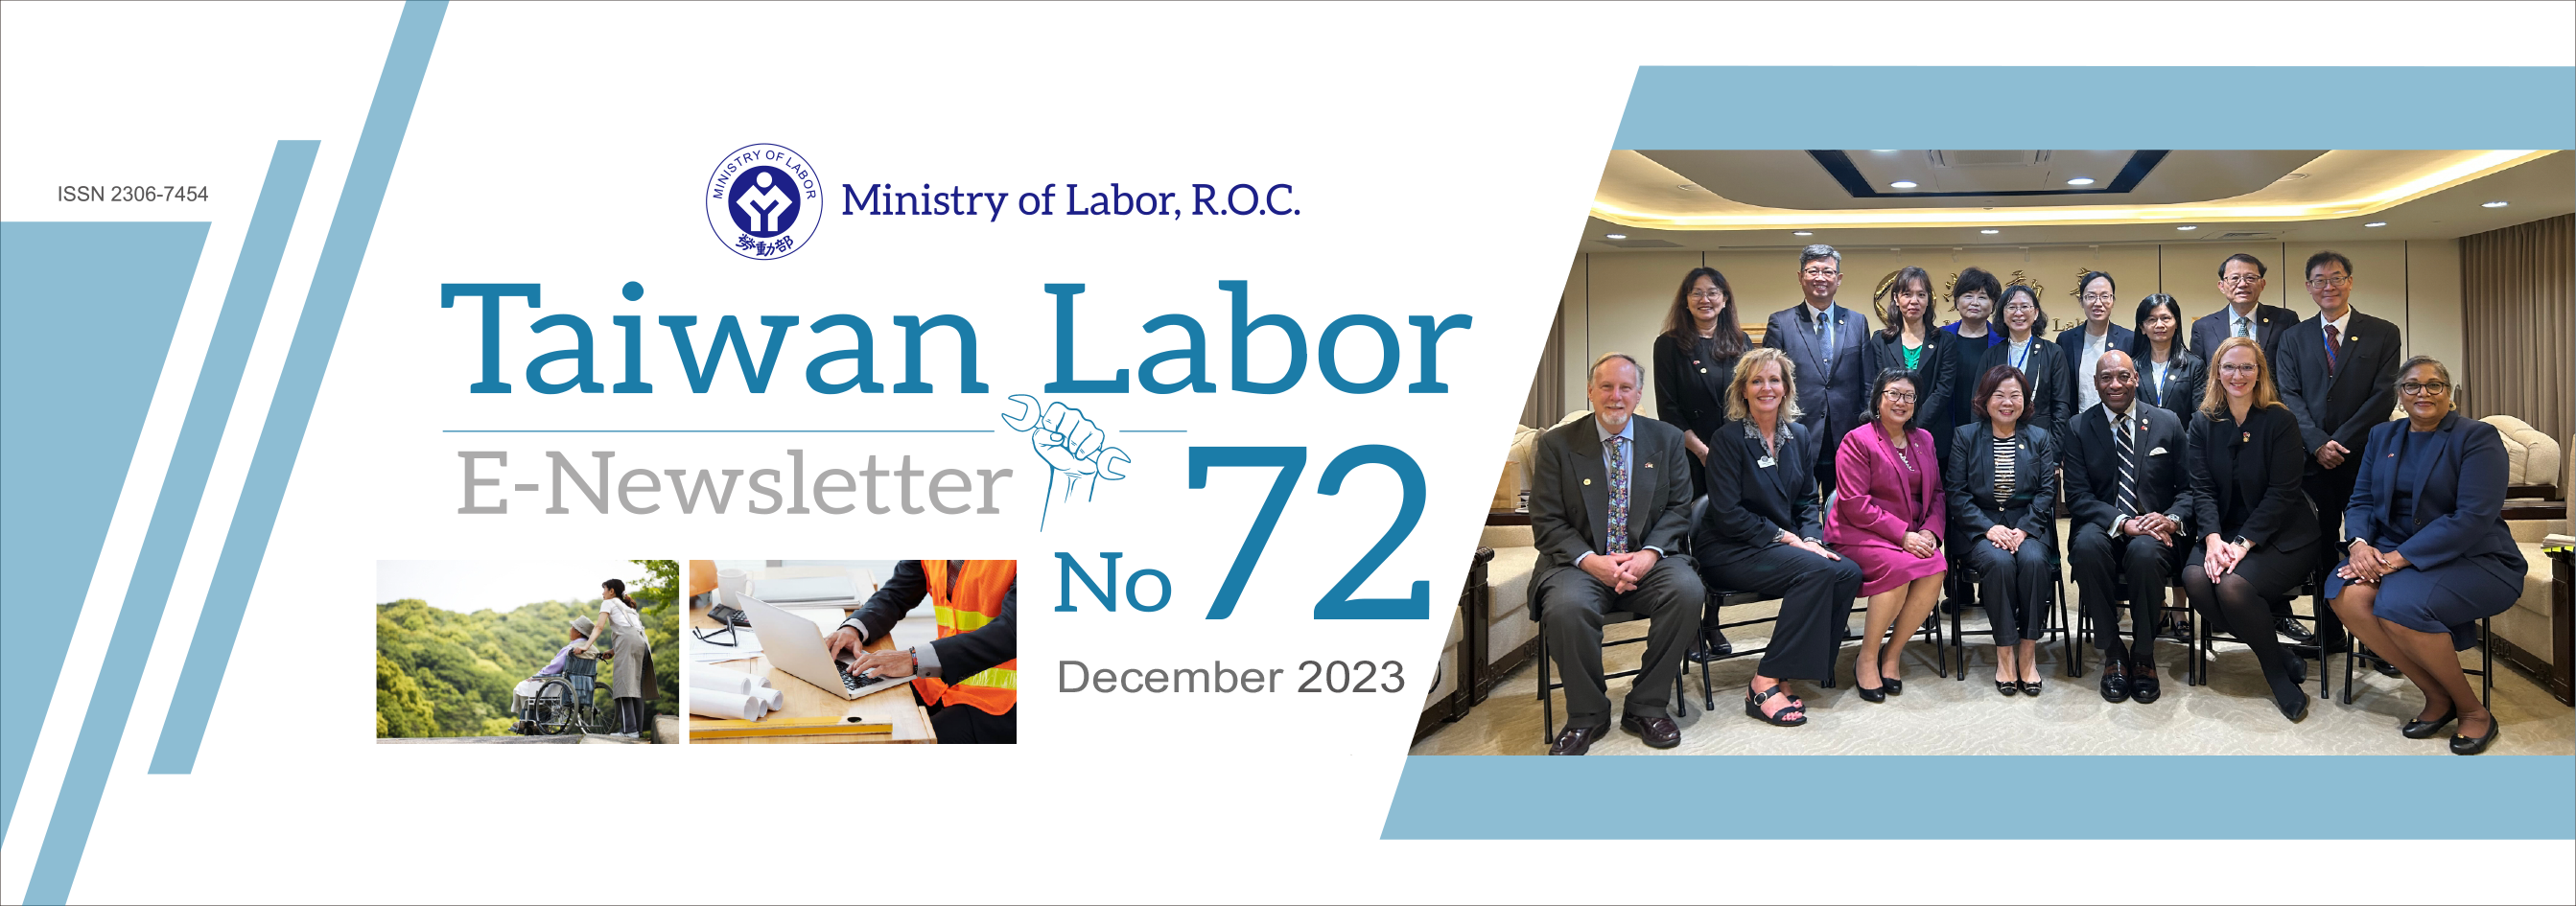 Taiwan Labor E-Newsletter No.72 Banner